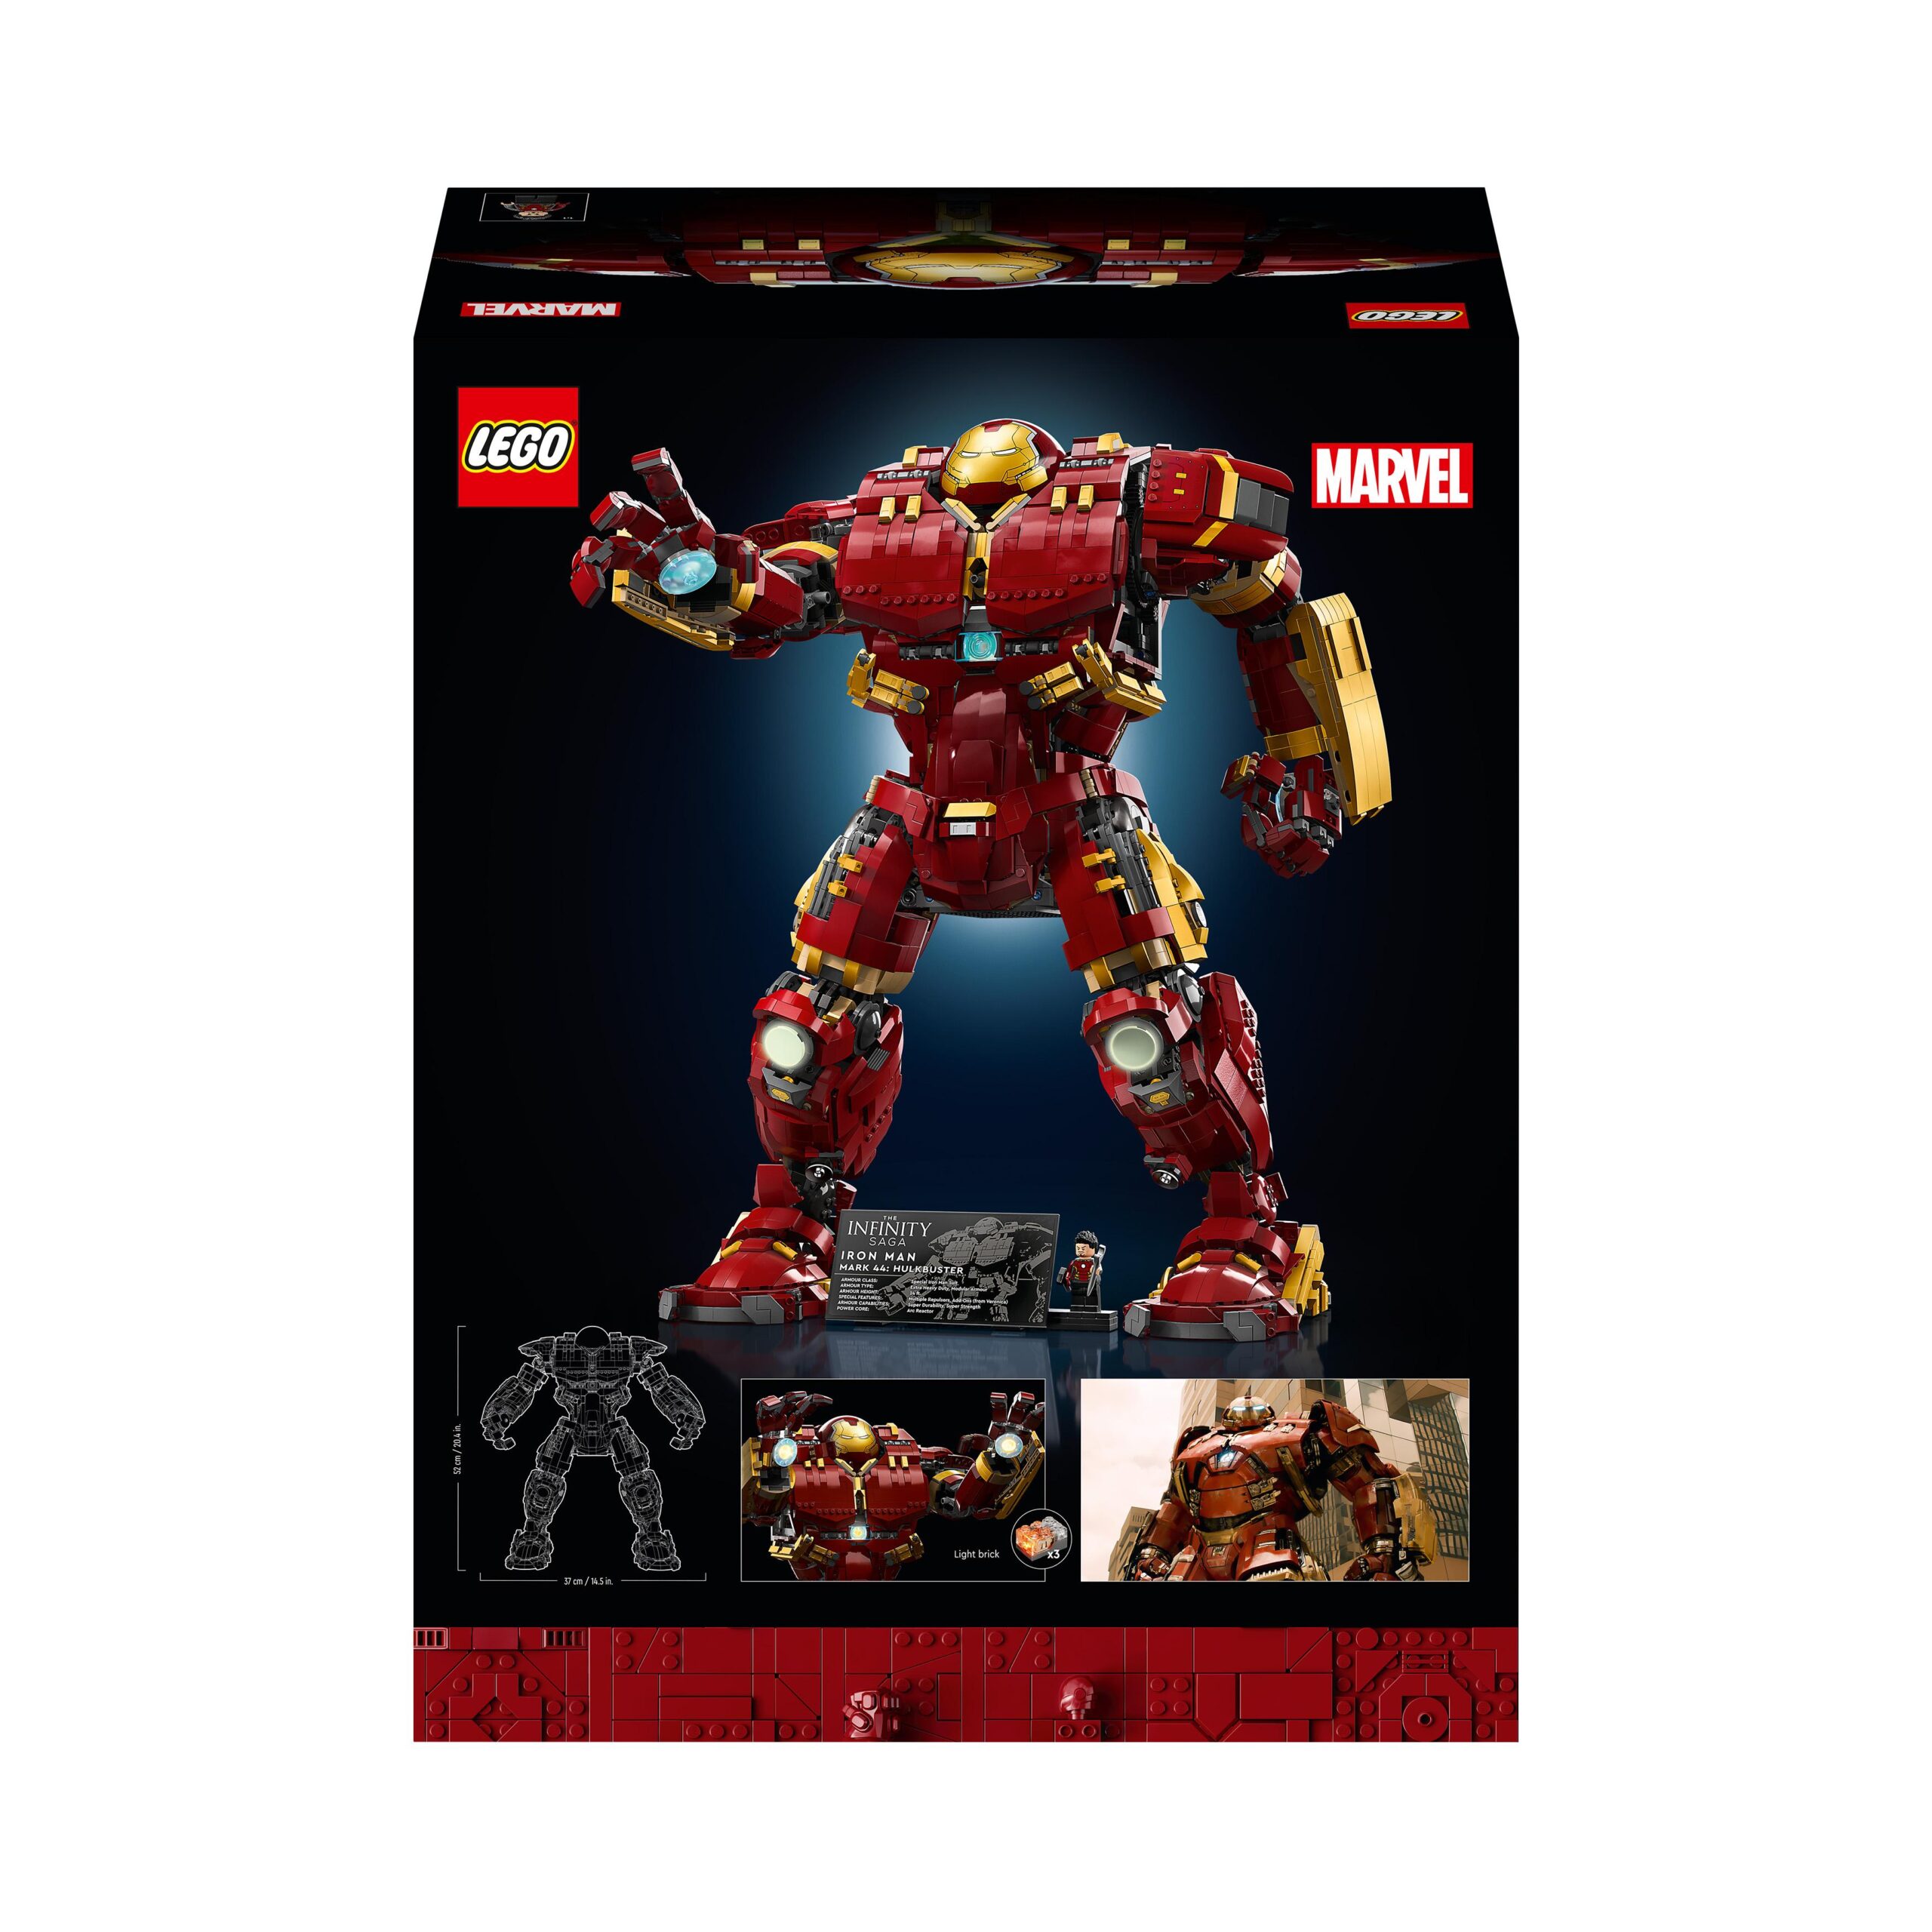 Lego marvel 76210 hulkbuster, grande mech mk44 del supereroe iron man da  avengers age of ultron con minifigure di tony stark - Toys Center